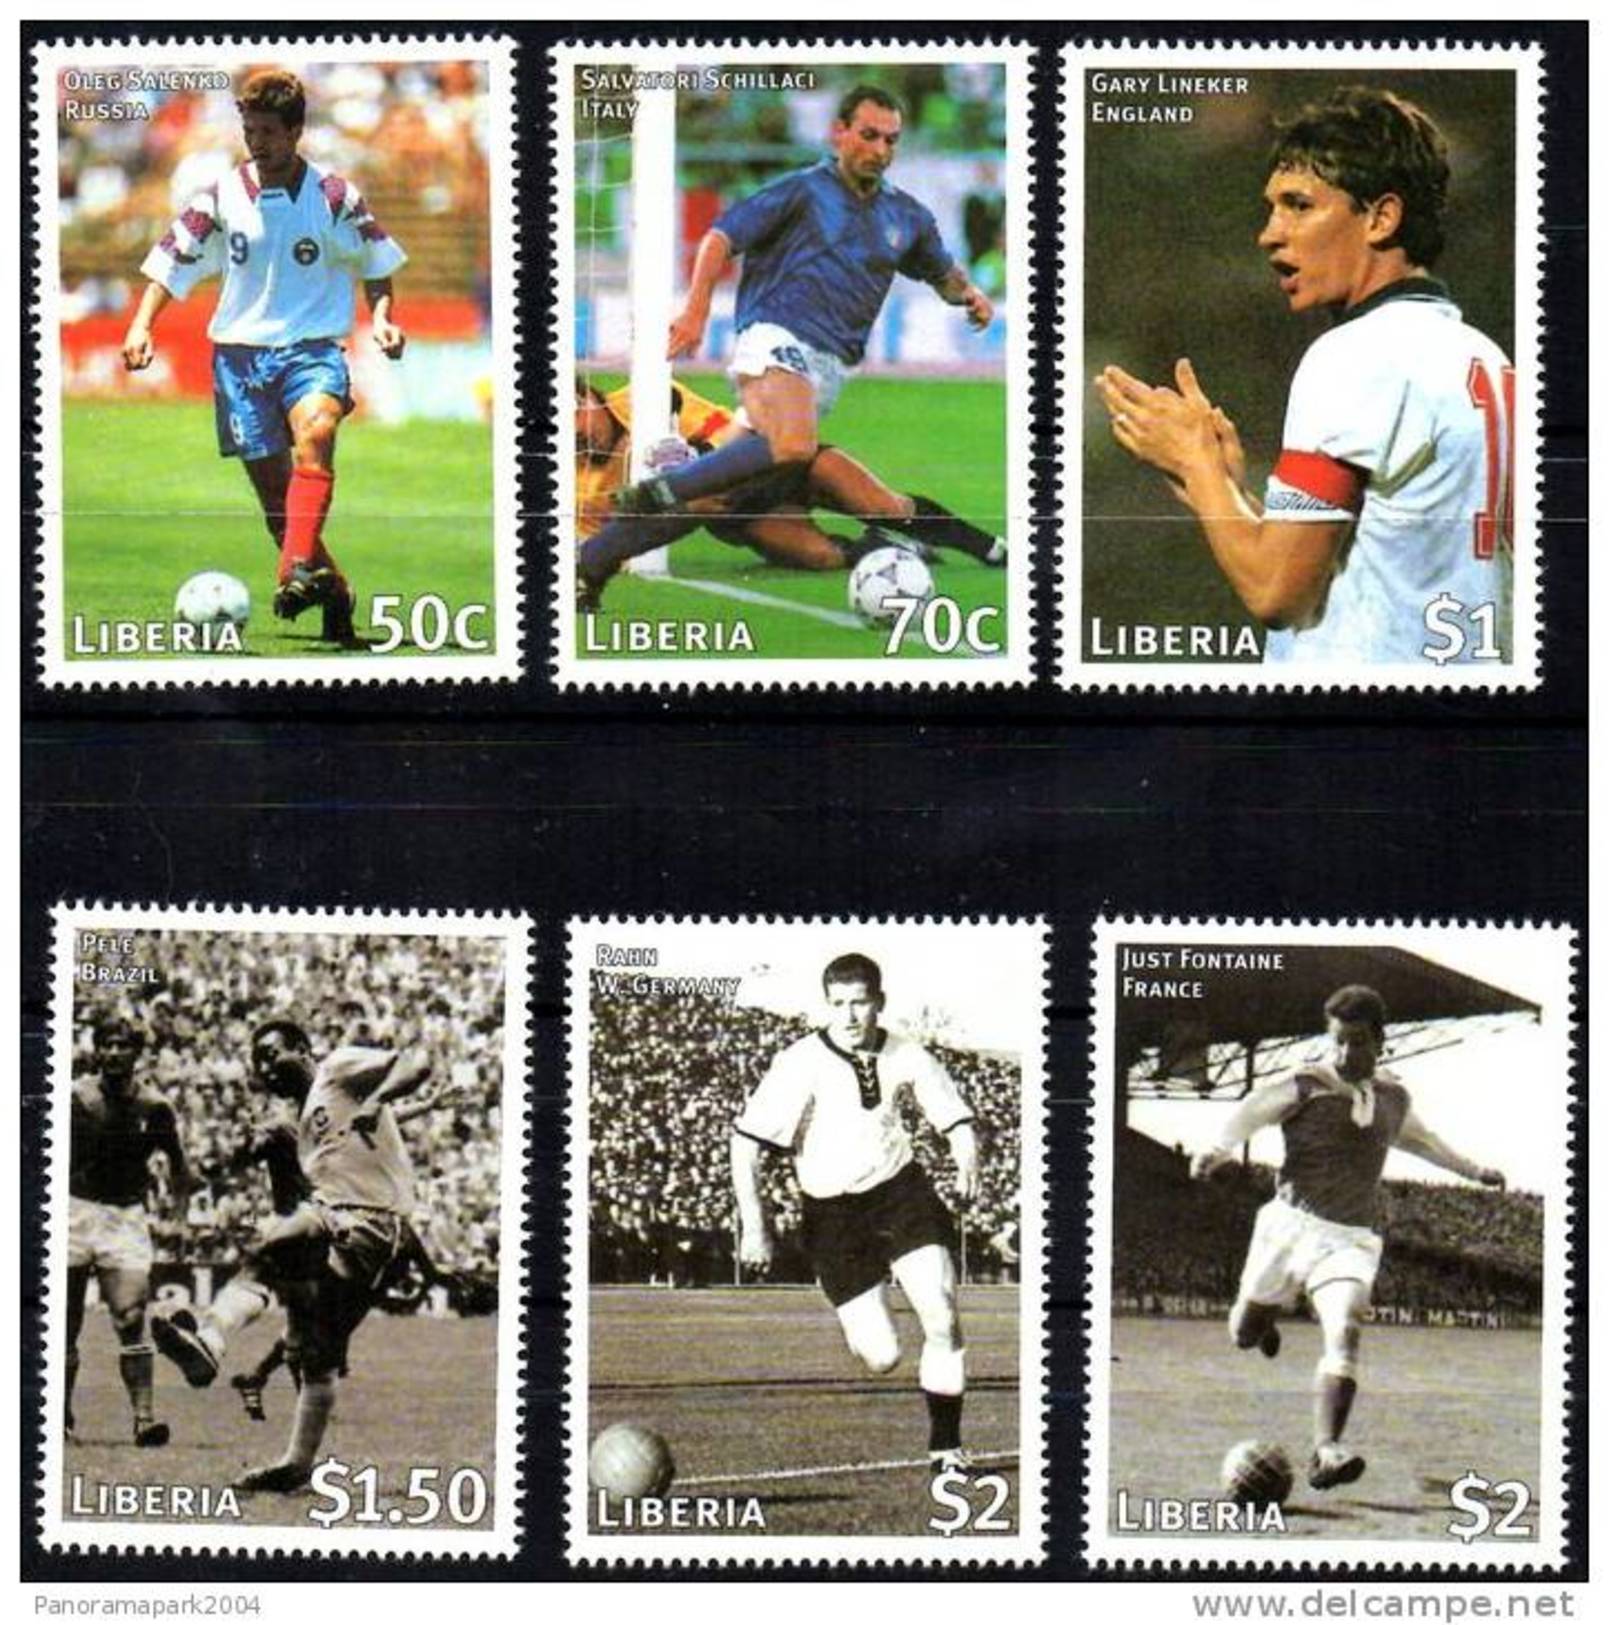 LIBERIA 1998 FOOTBALL SOCCER FUSSBALL WORLD CUP COUPE DU MONDE WM FRANCE ´98 SERIE 6 TIMBRES Mi. 1949-54 Yvert 1531-36 - 1998 – France